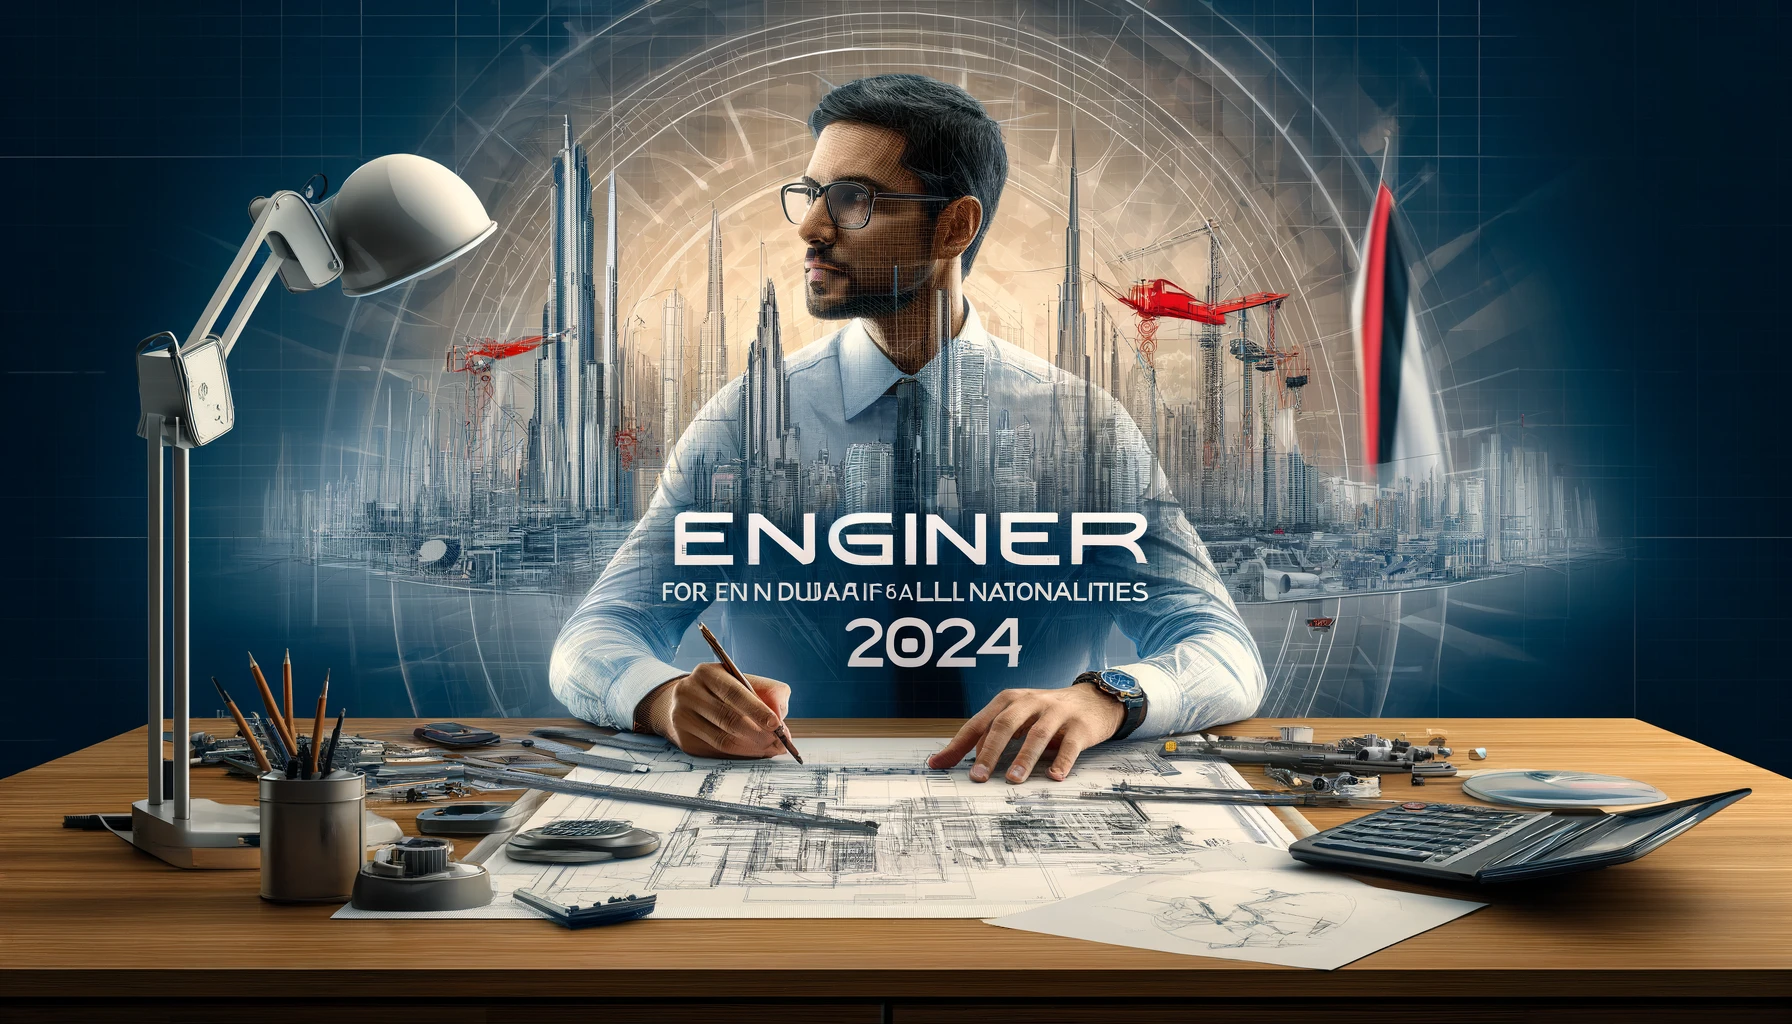 Engineer hiring in Dubai for all nationalities 2024